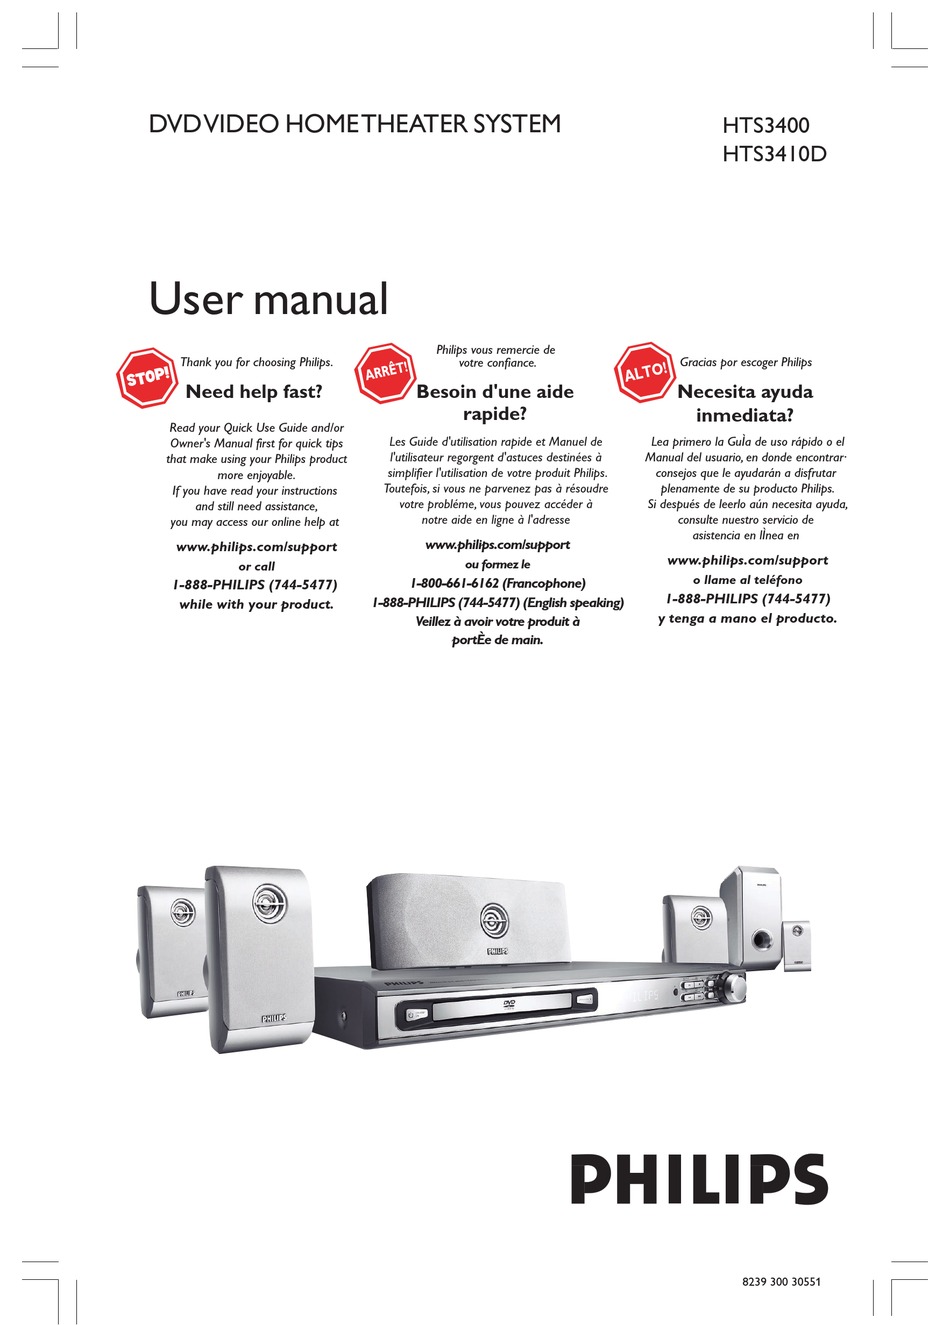 touchcopy 12 user manual